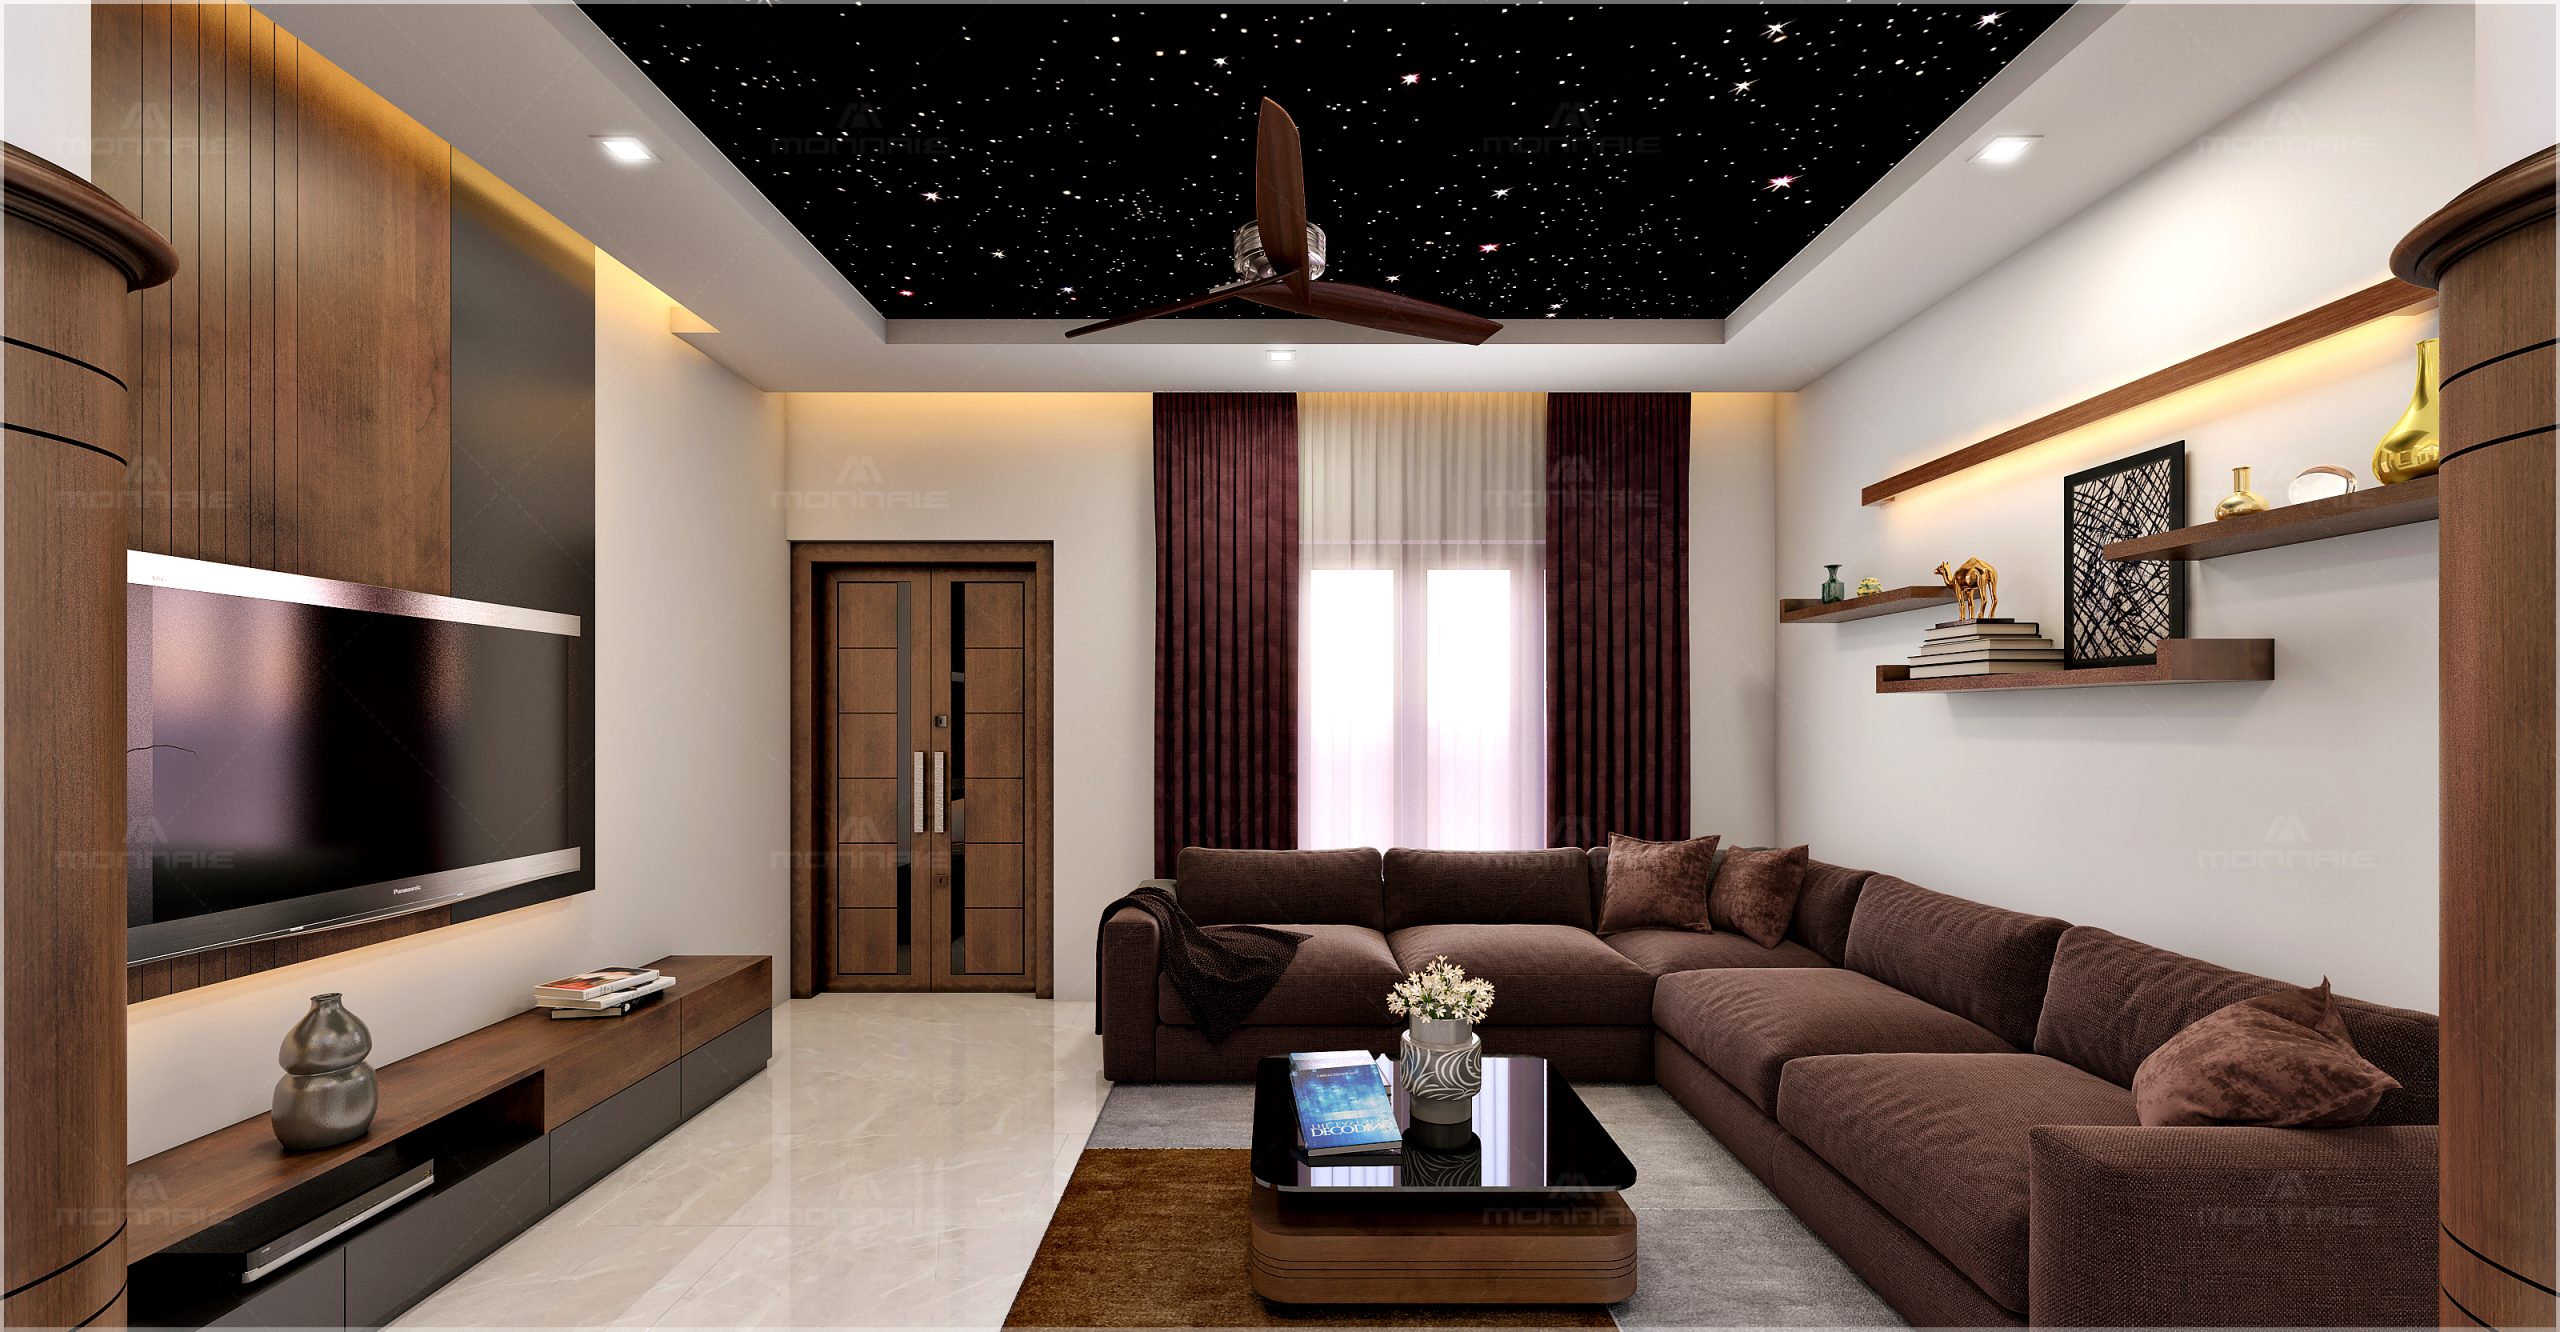 Interior Design For Living Room Kerala Style – Vamos Arema